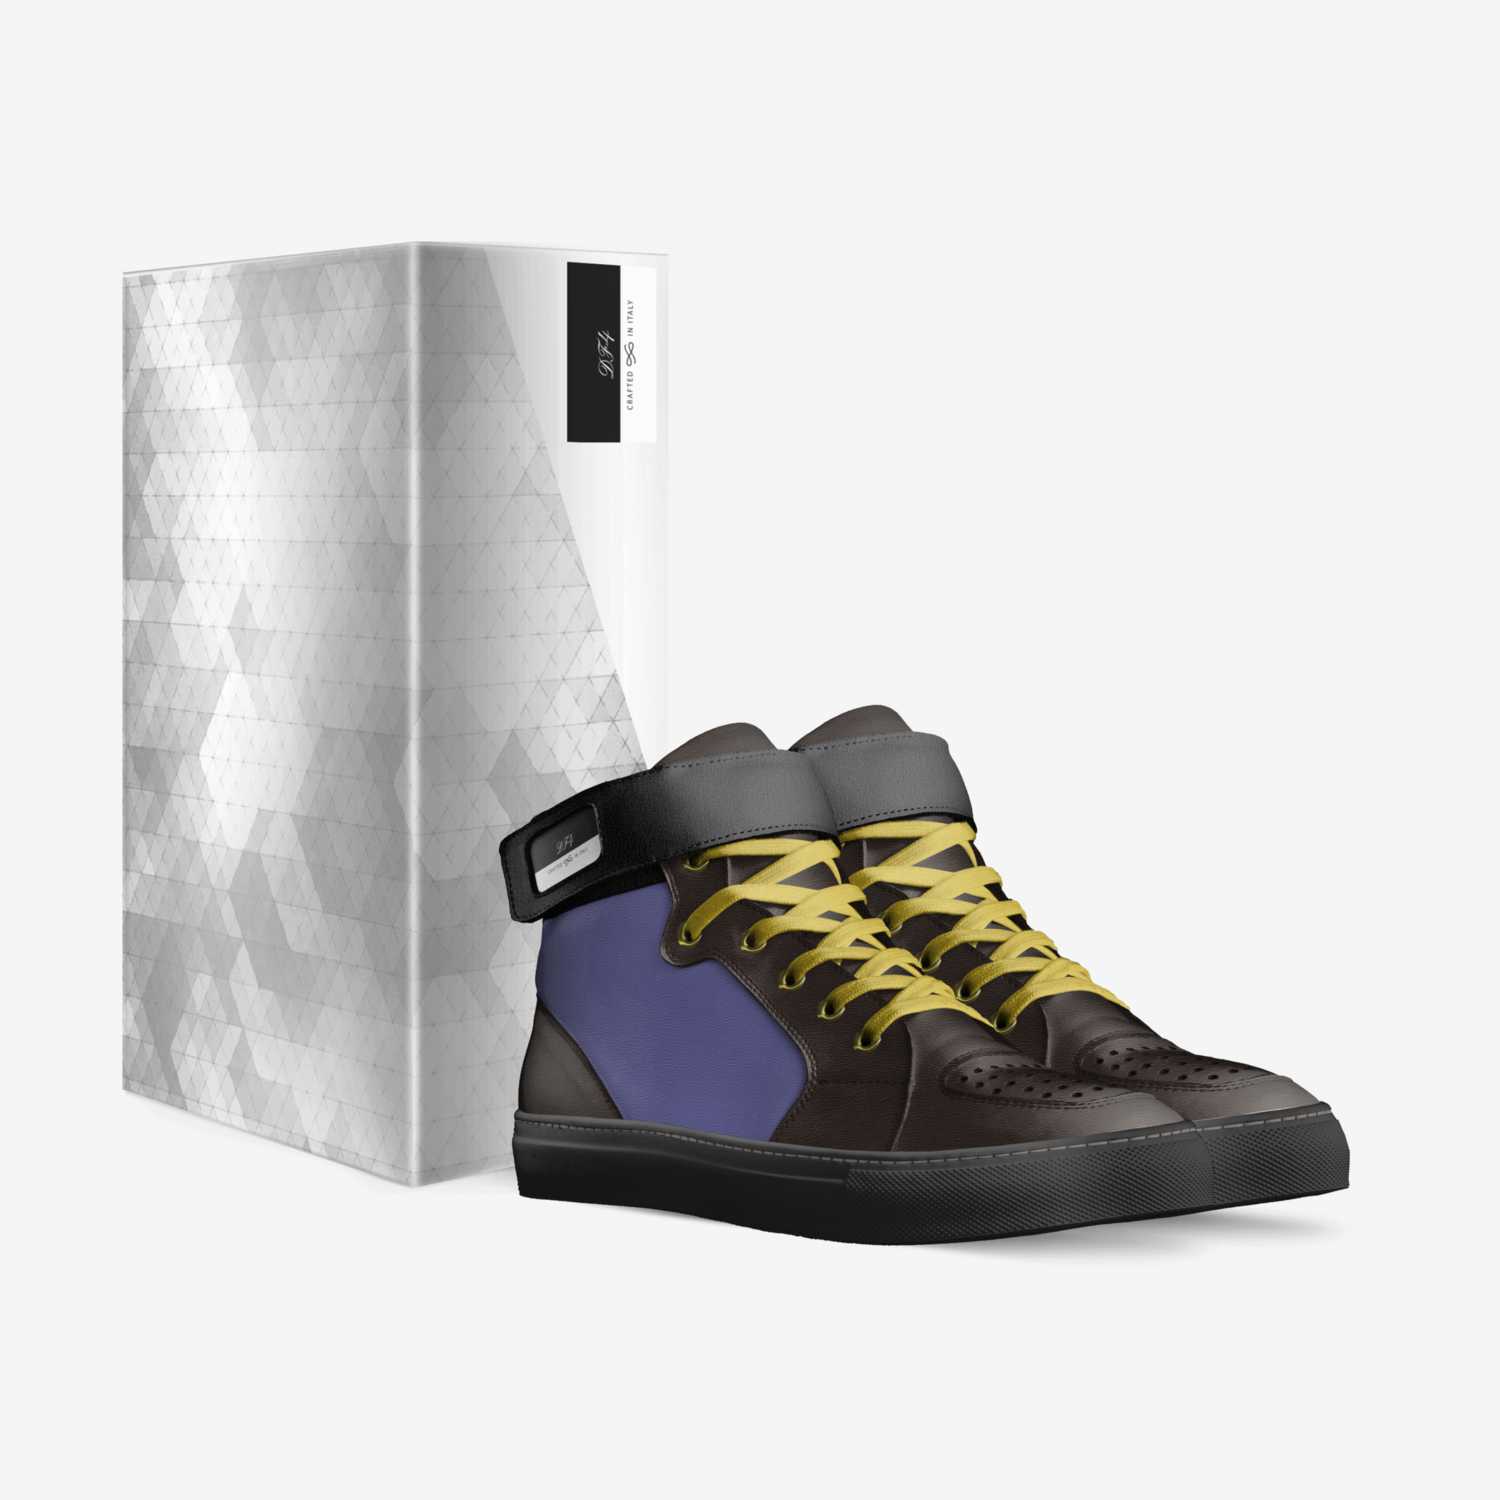 DF4 custom made in Italy shoes by Richard David De Francis Gumulia | Box view